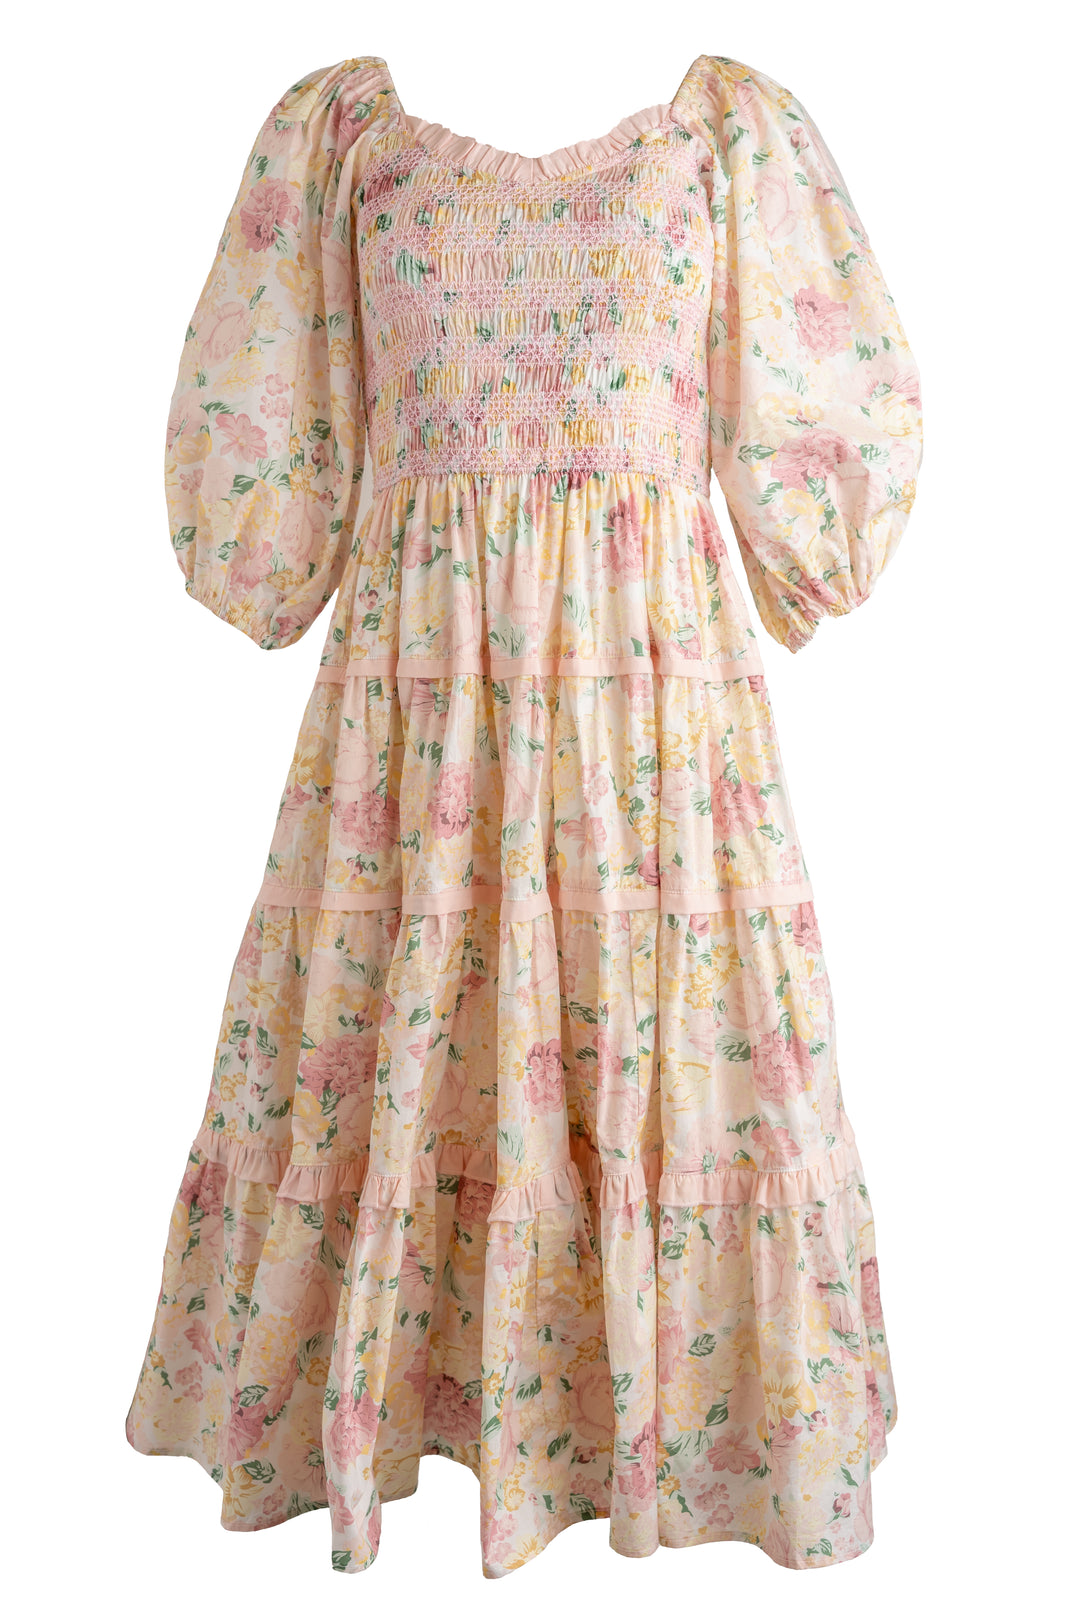 Roselyn Dress in Pastel Floral